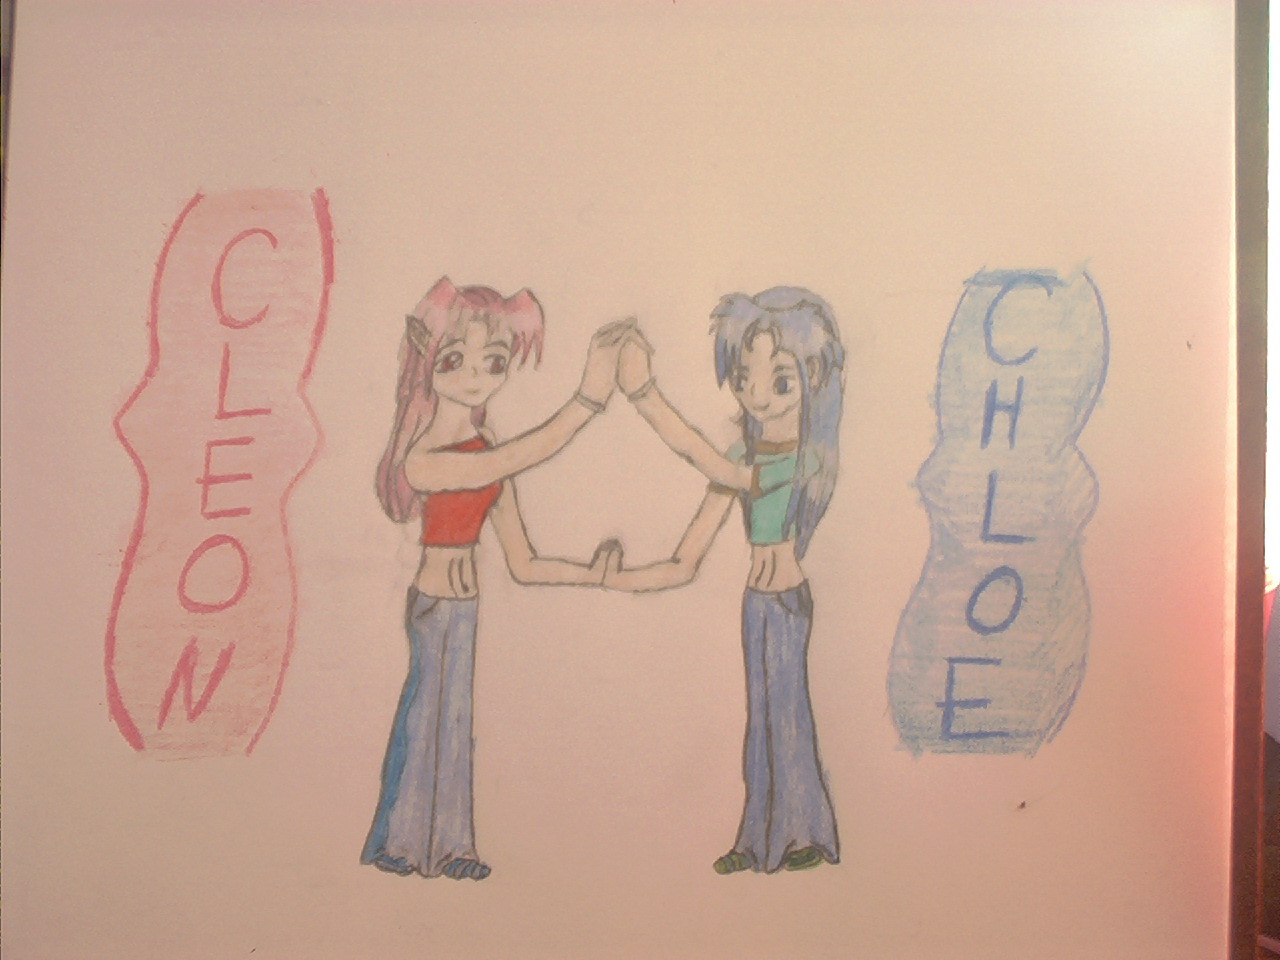 Cleon and Chloe by KuramyRose33